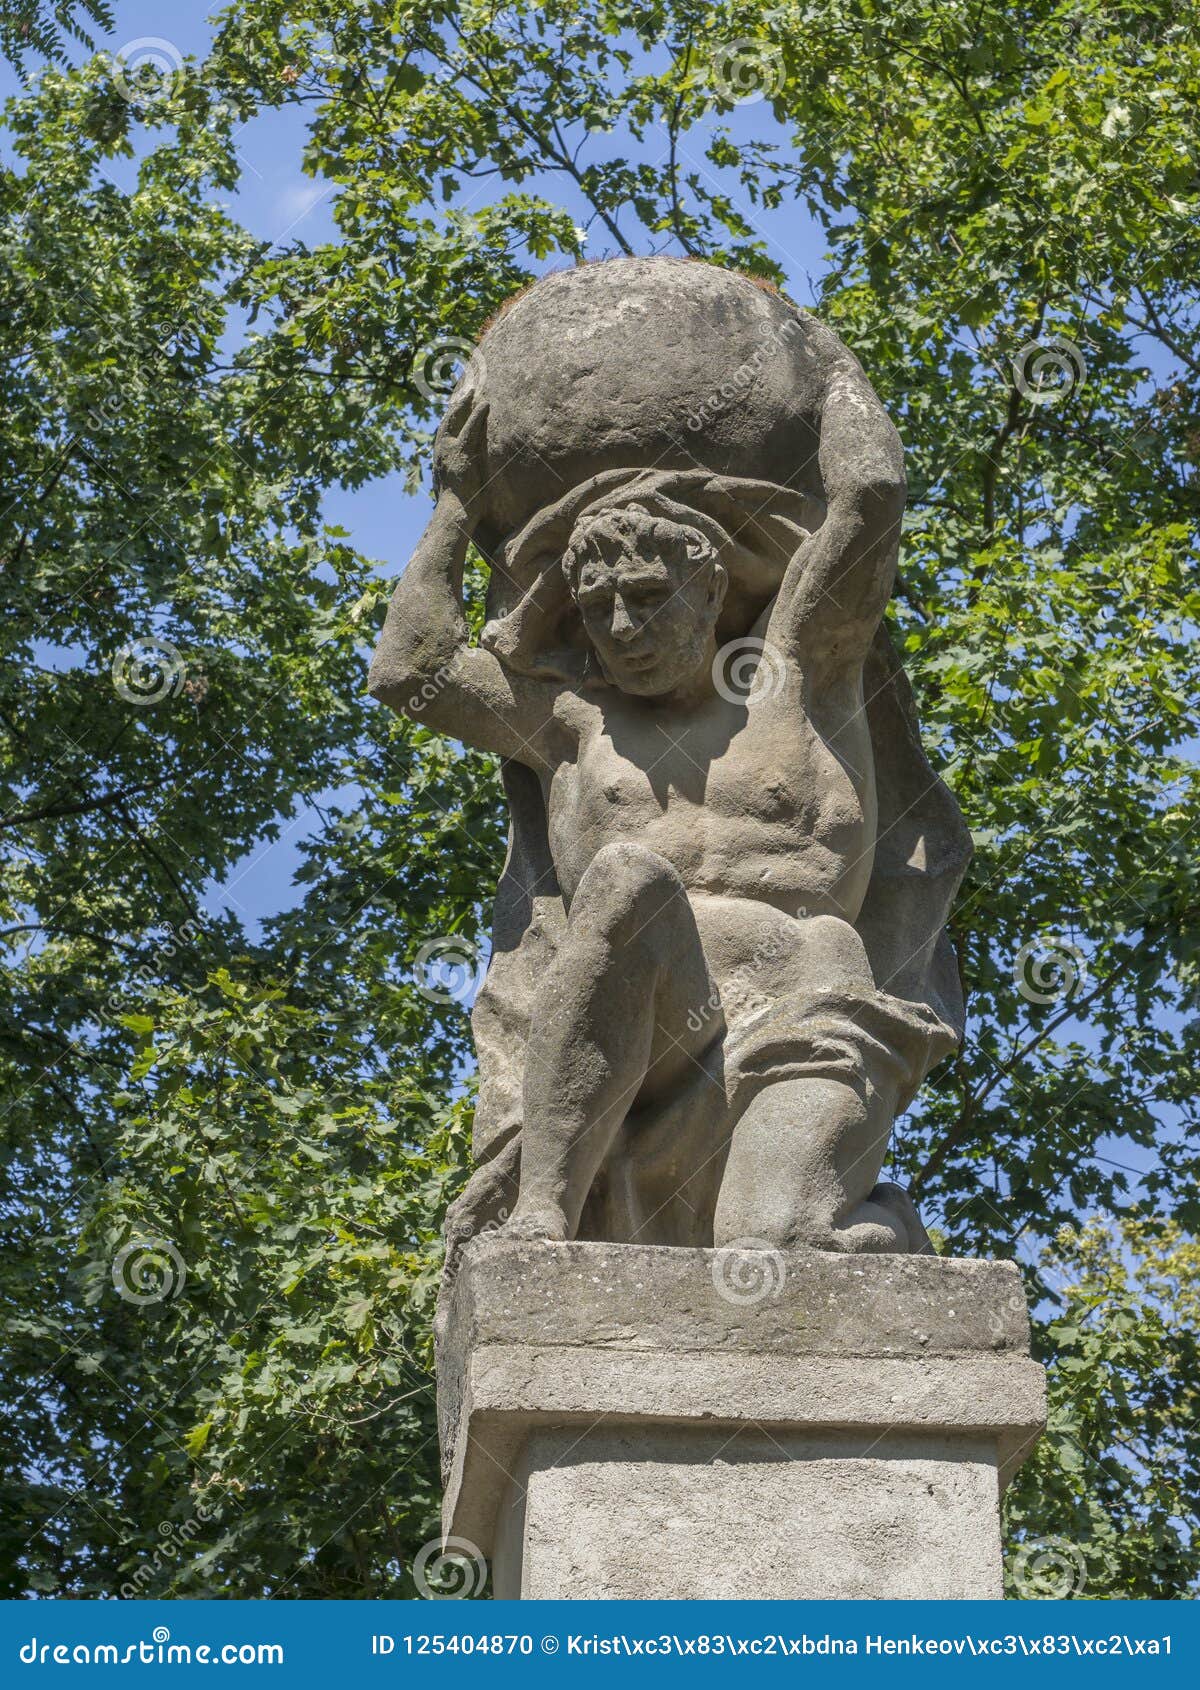 sisyphus statue